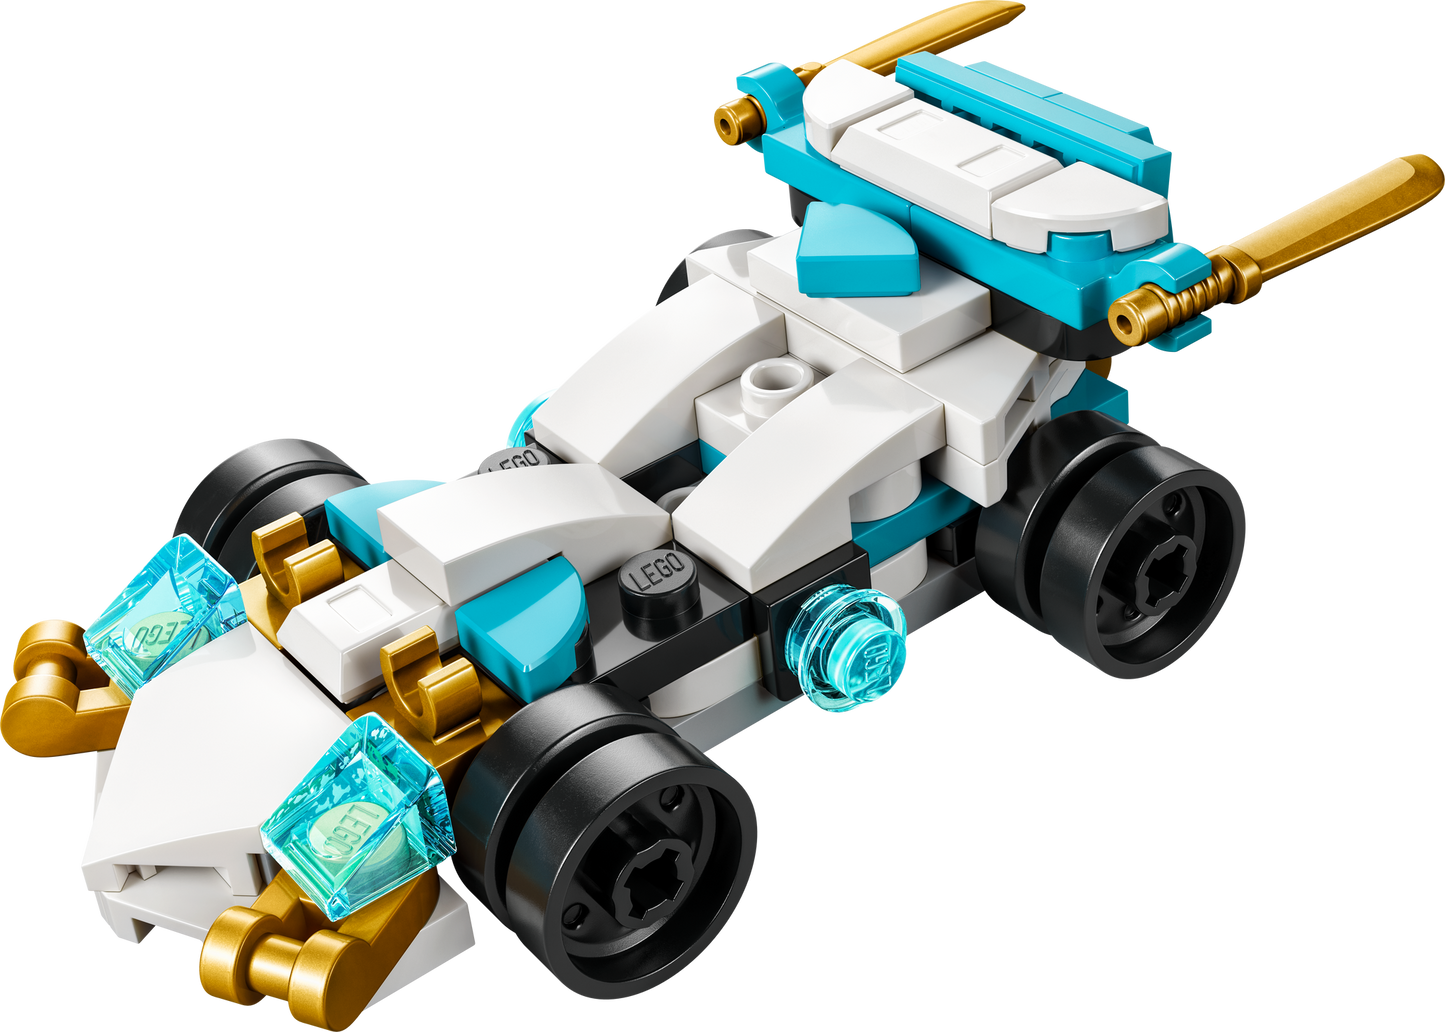 30674 Zane's Dragon Power Vehicles